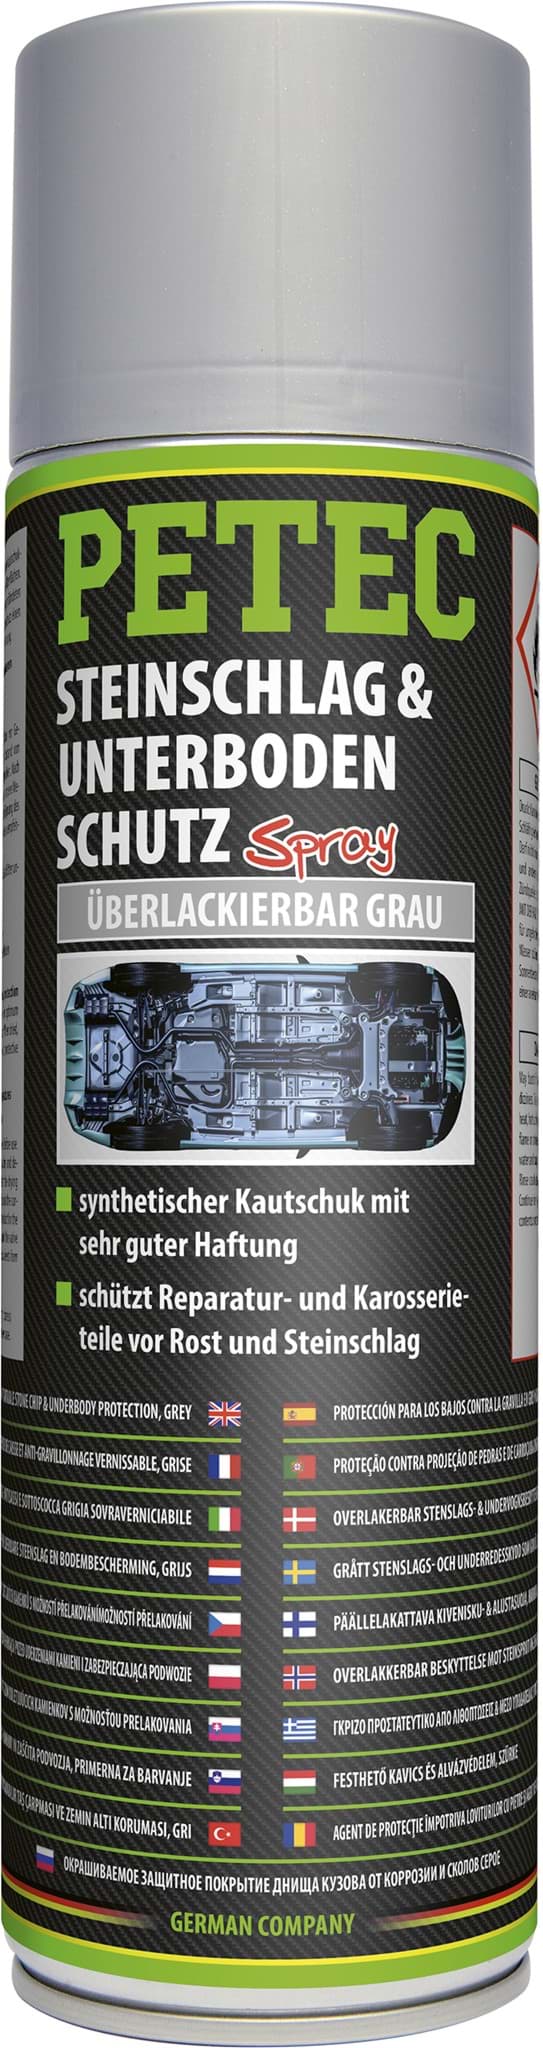 Petec Unterbodenschutz UBS Grau überlackierbar 500ml resmi